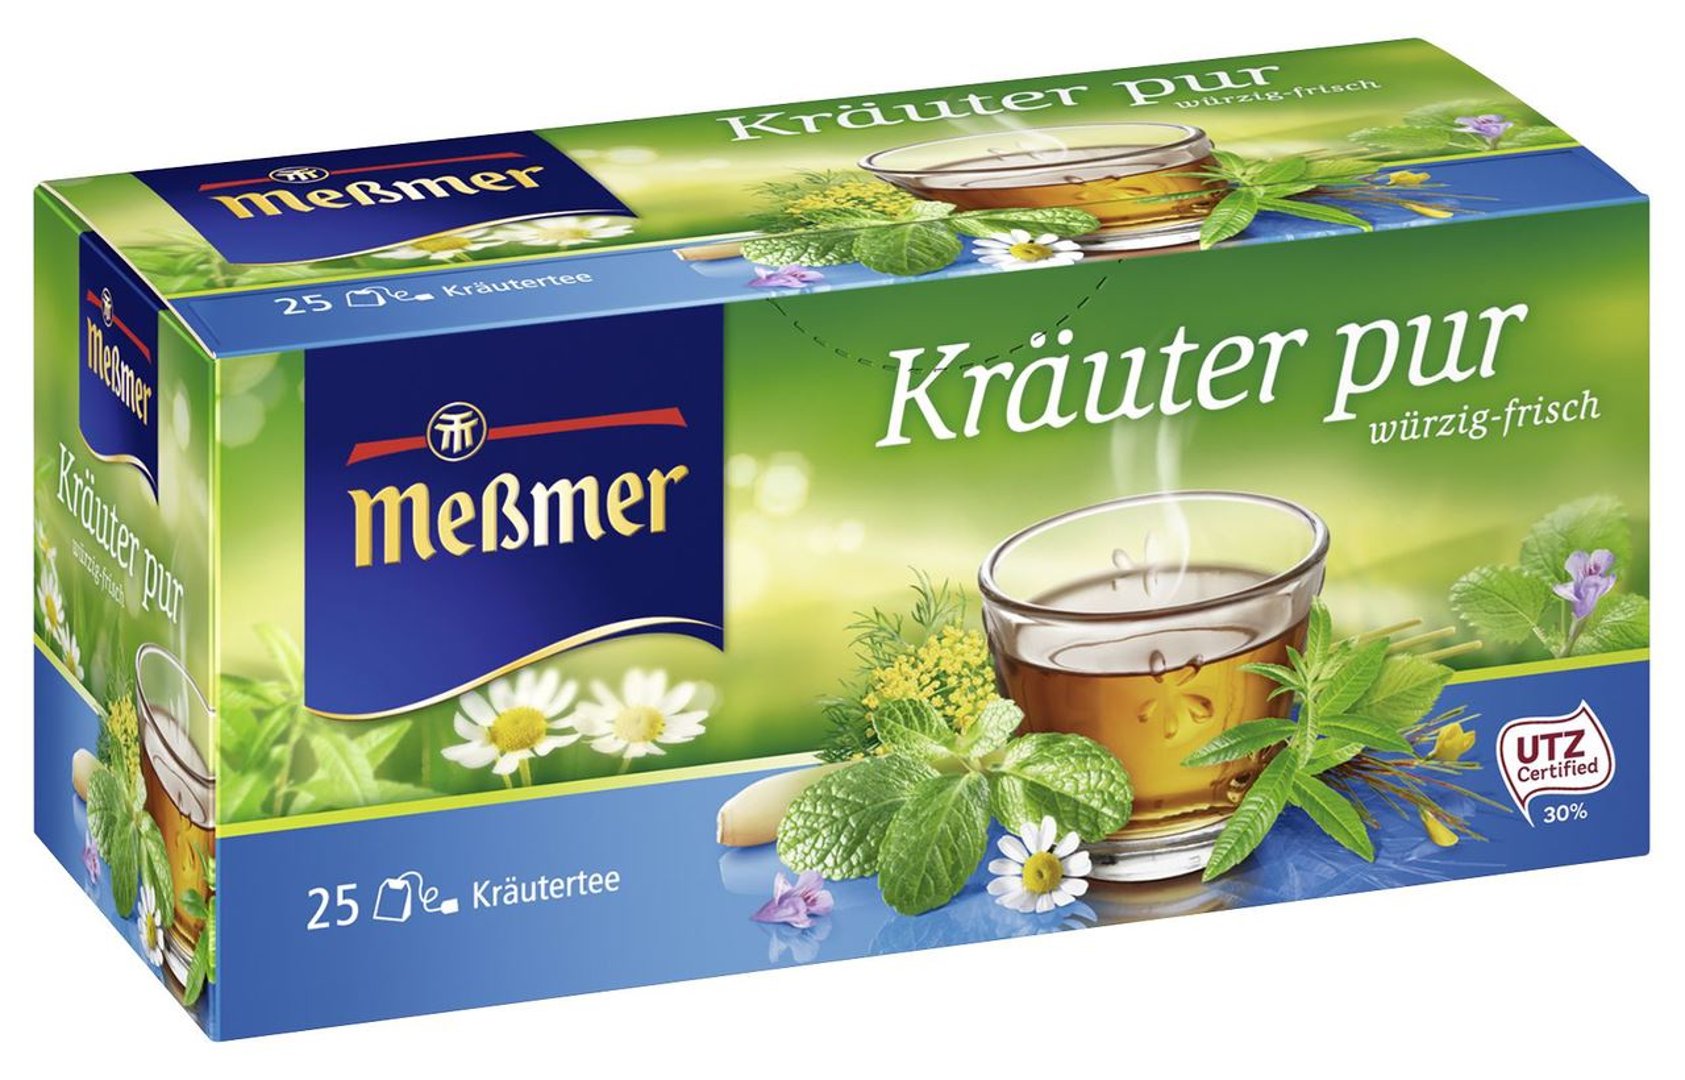 MEßMER - Kräutertee Pur würzig-frisch, 25 Teebeutel - 12 x 50 g Karton